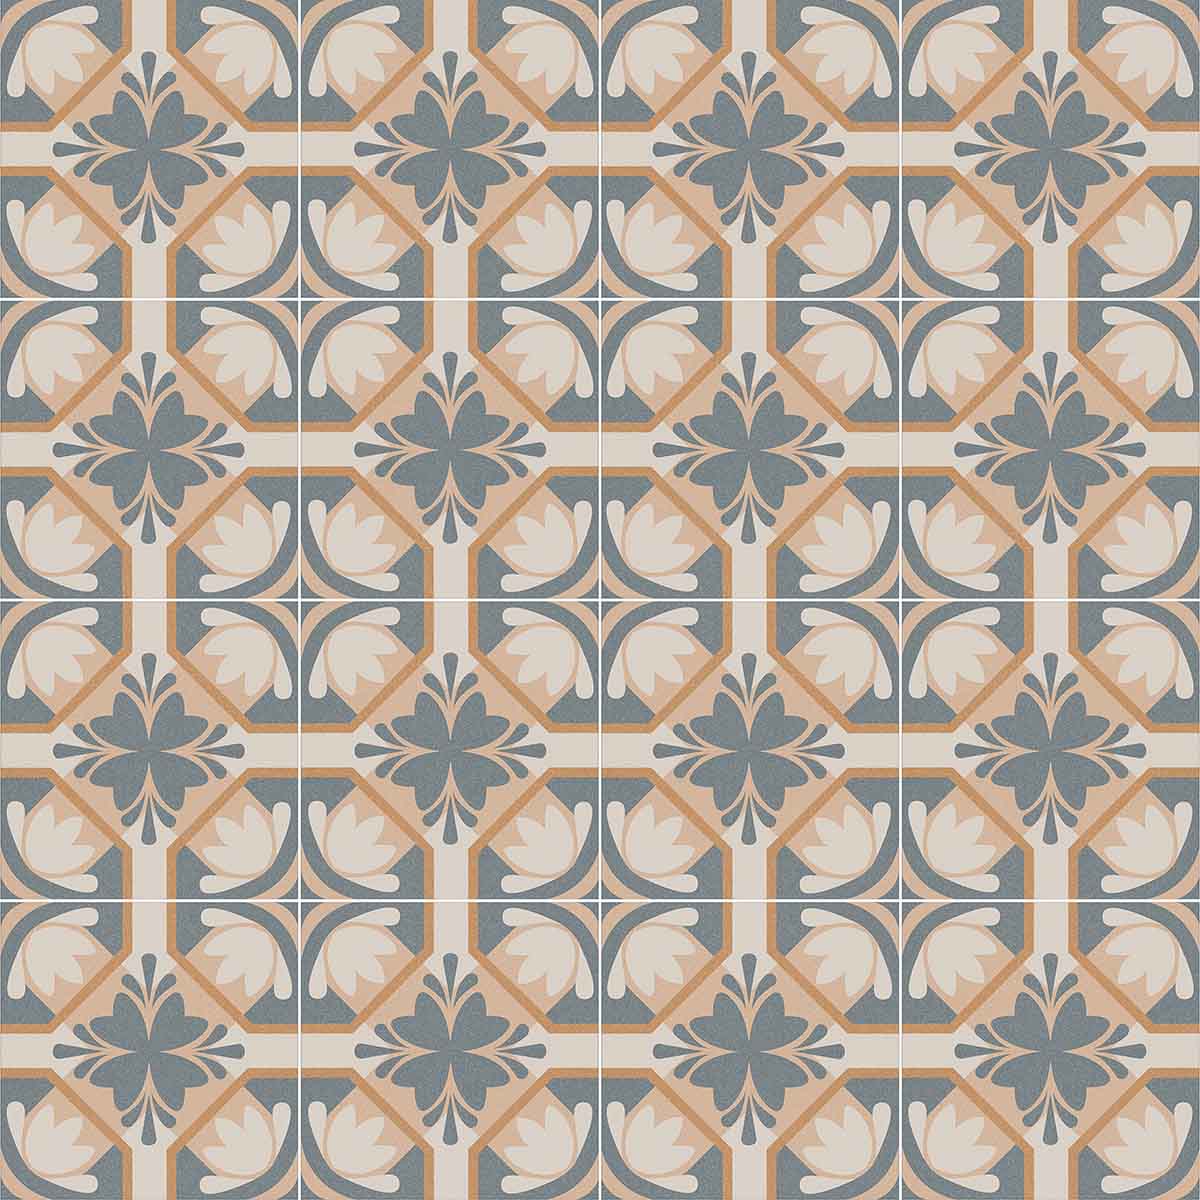 vives bali jimbaran pattern porcelain tile matt 20x20cm